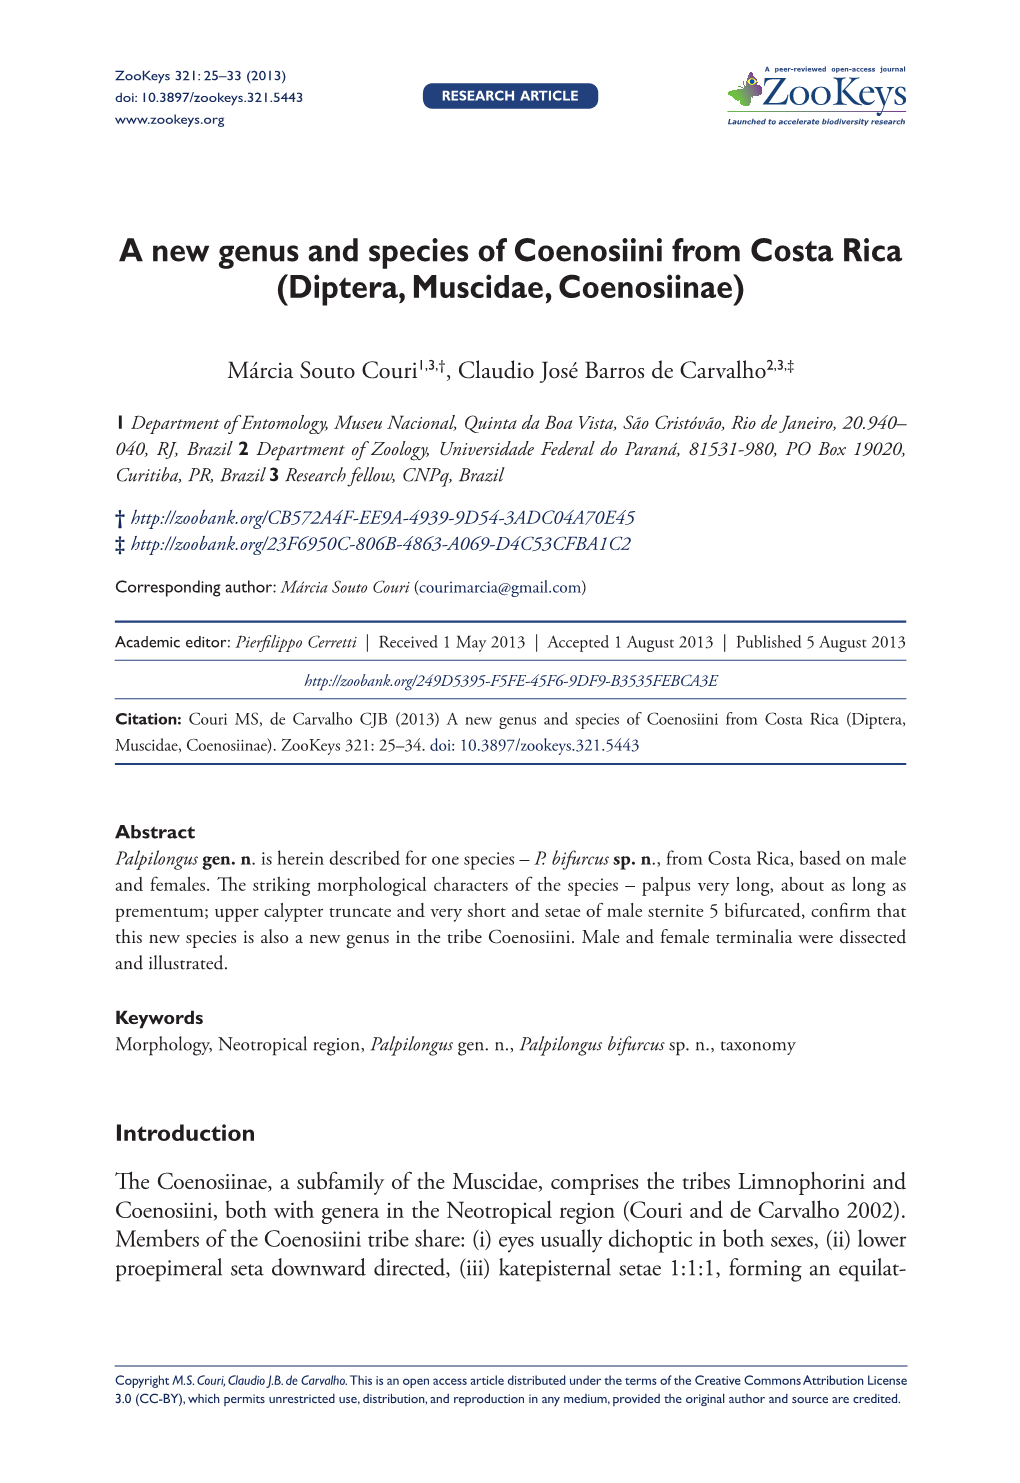 A New Genus and Species of Coenosiini from Costa Rica (Diptera, Muscidae, Coenosiinae)